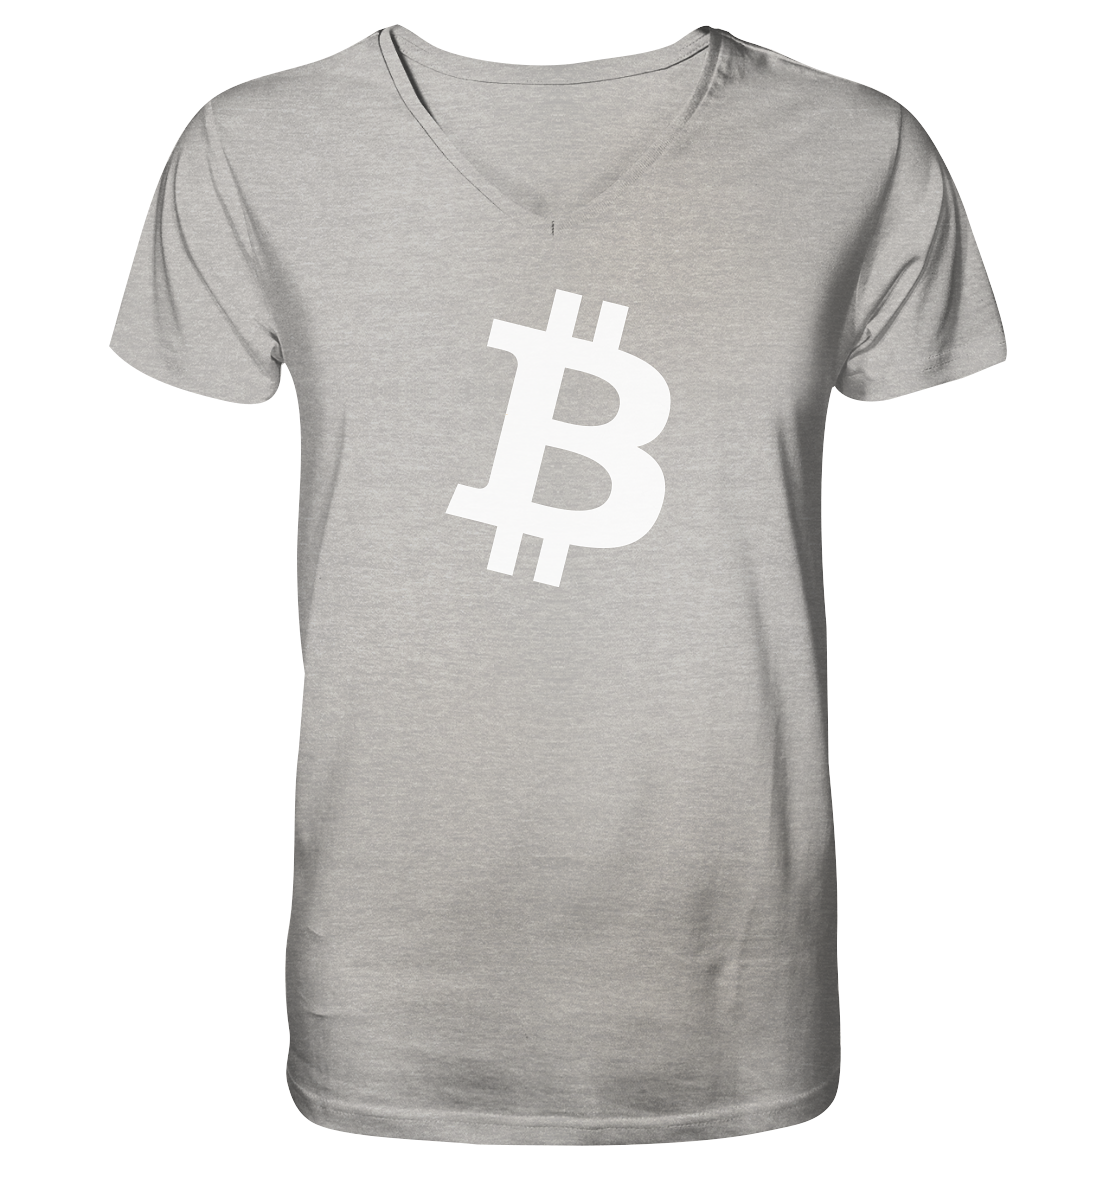 Bitcoin "simple B white" - Mens Organic V-Neck Shirt